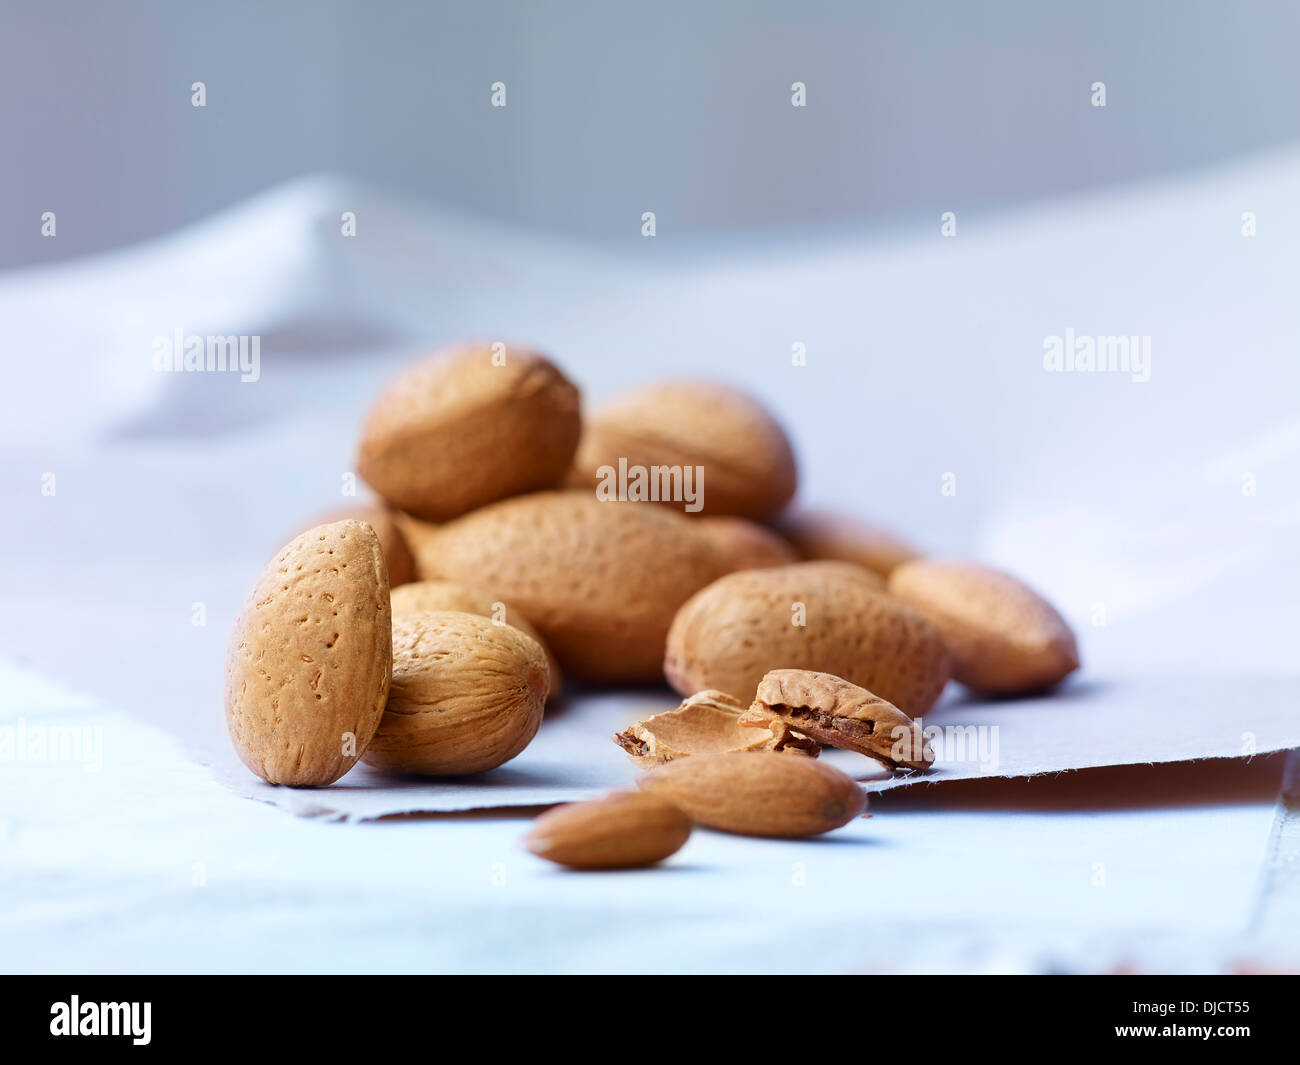 Almonds, studio shot Stock Photo